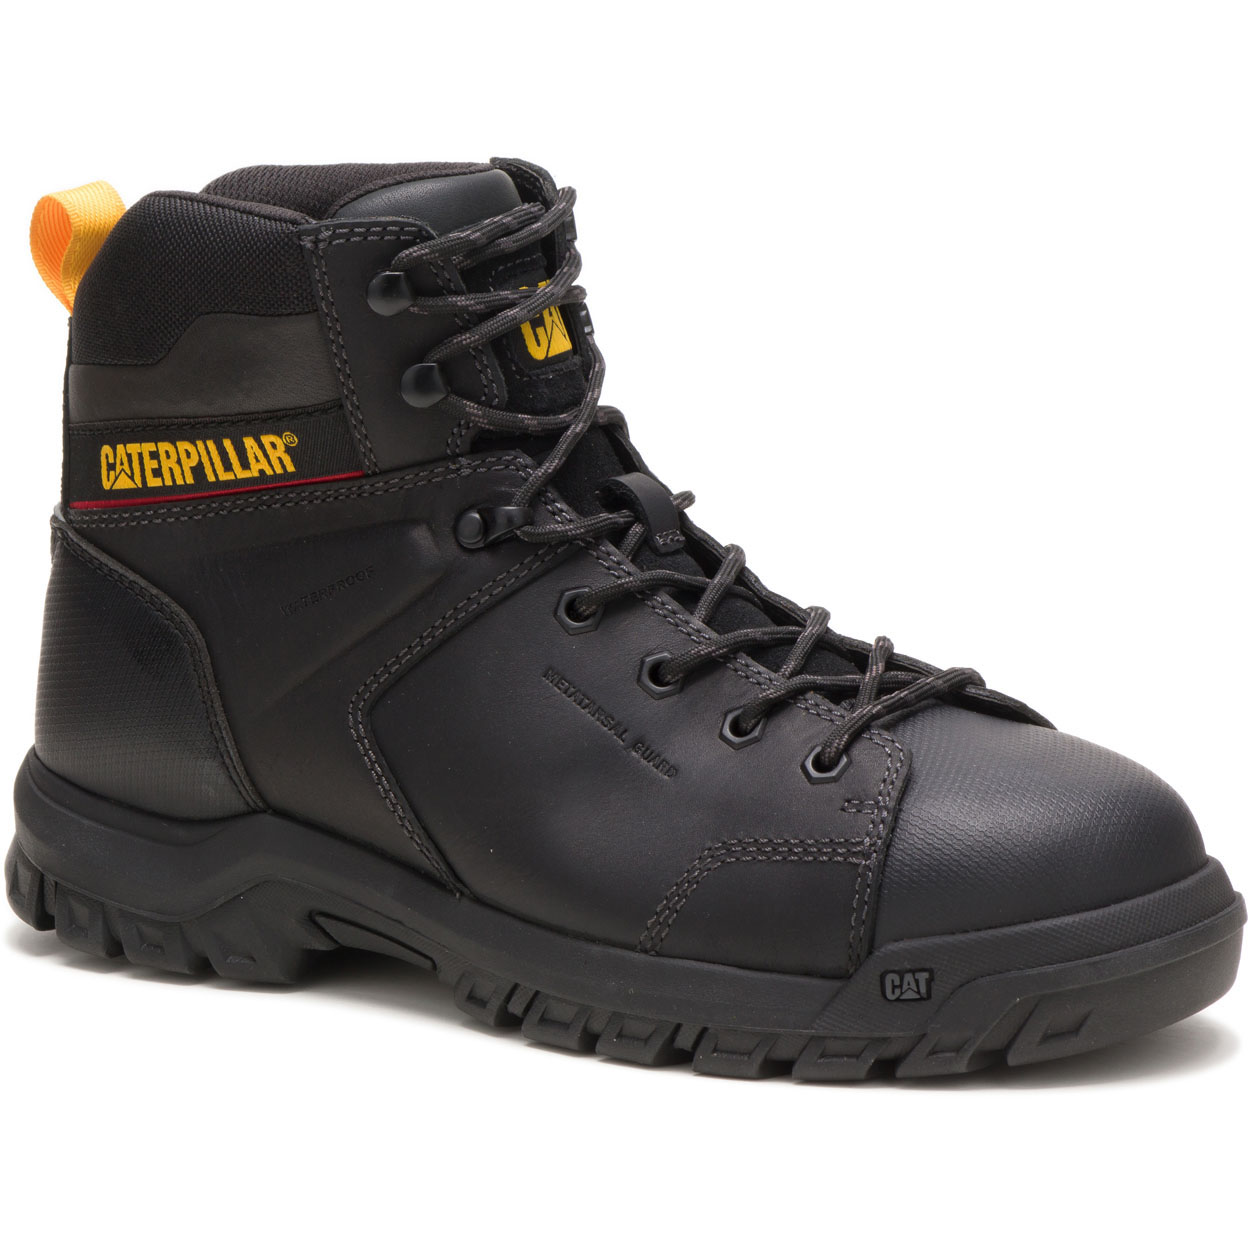 Caterpillar Safety Boots UAE - Caterpillar Wellspring Mens - Black HGUCEN672